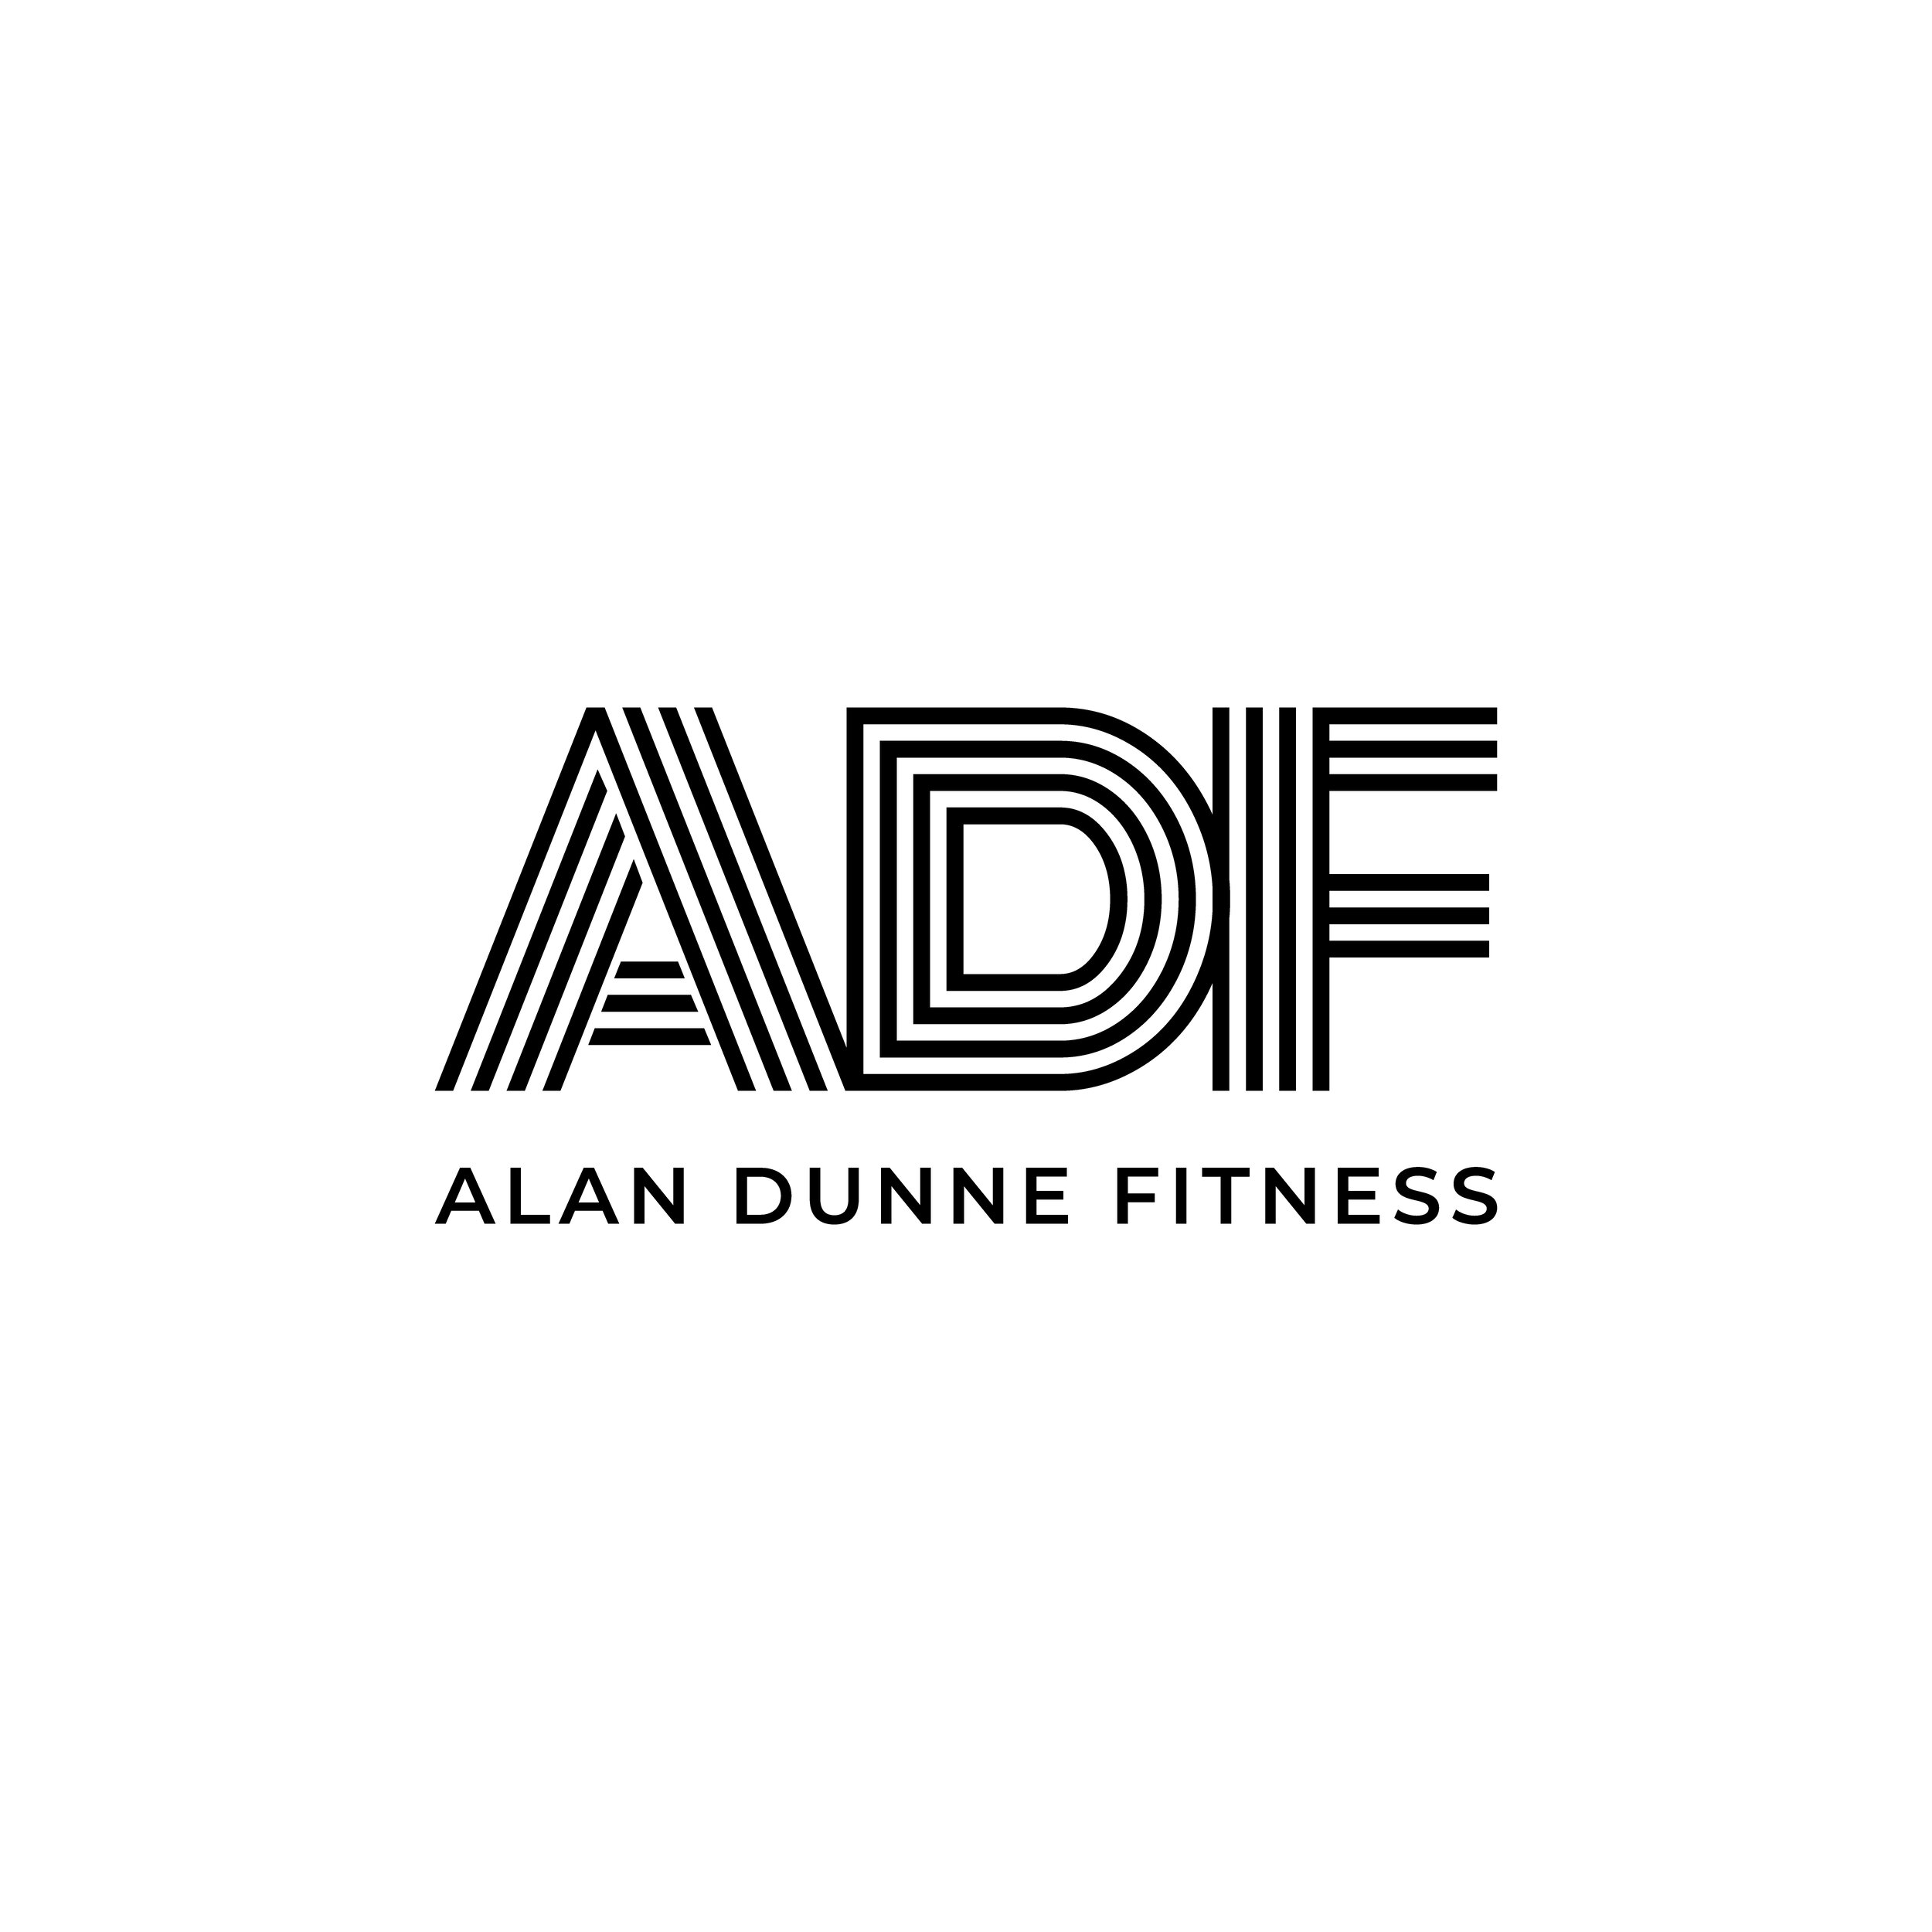 Alan Dunne Fitness